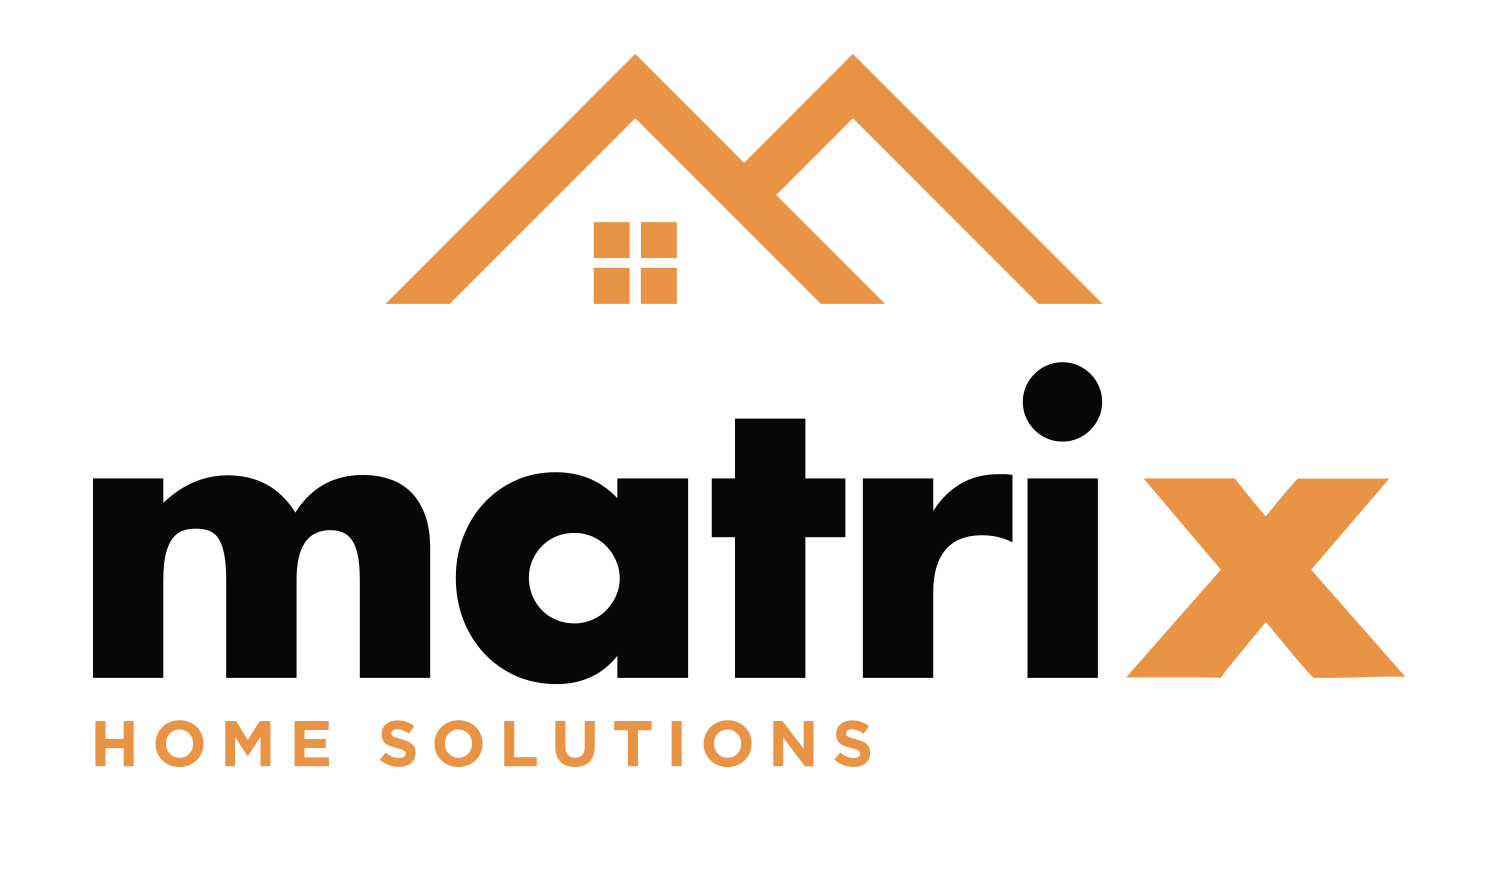 "Matrix Home Solutions" logo in orange and black